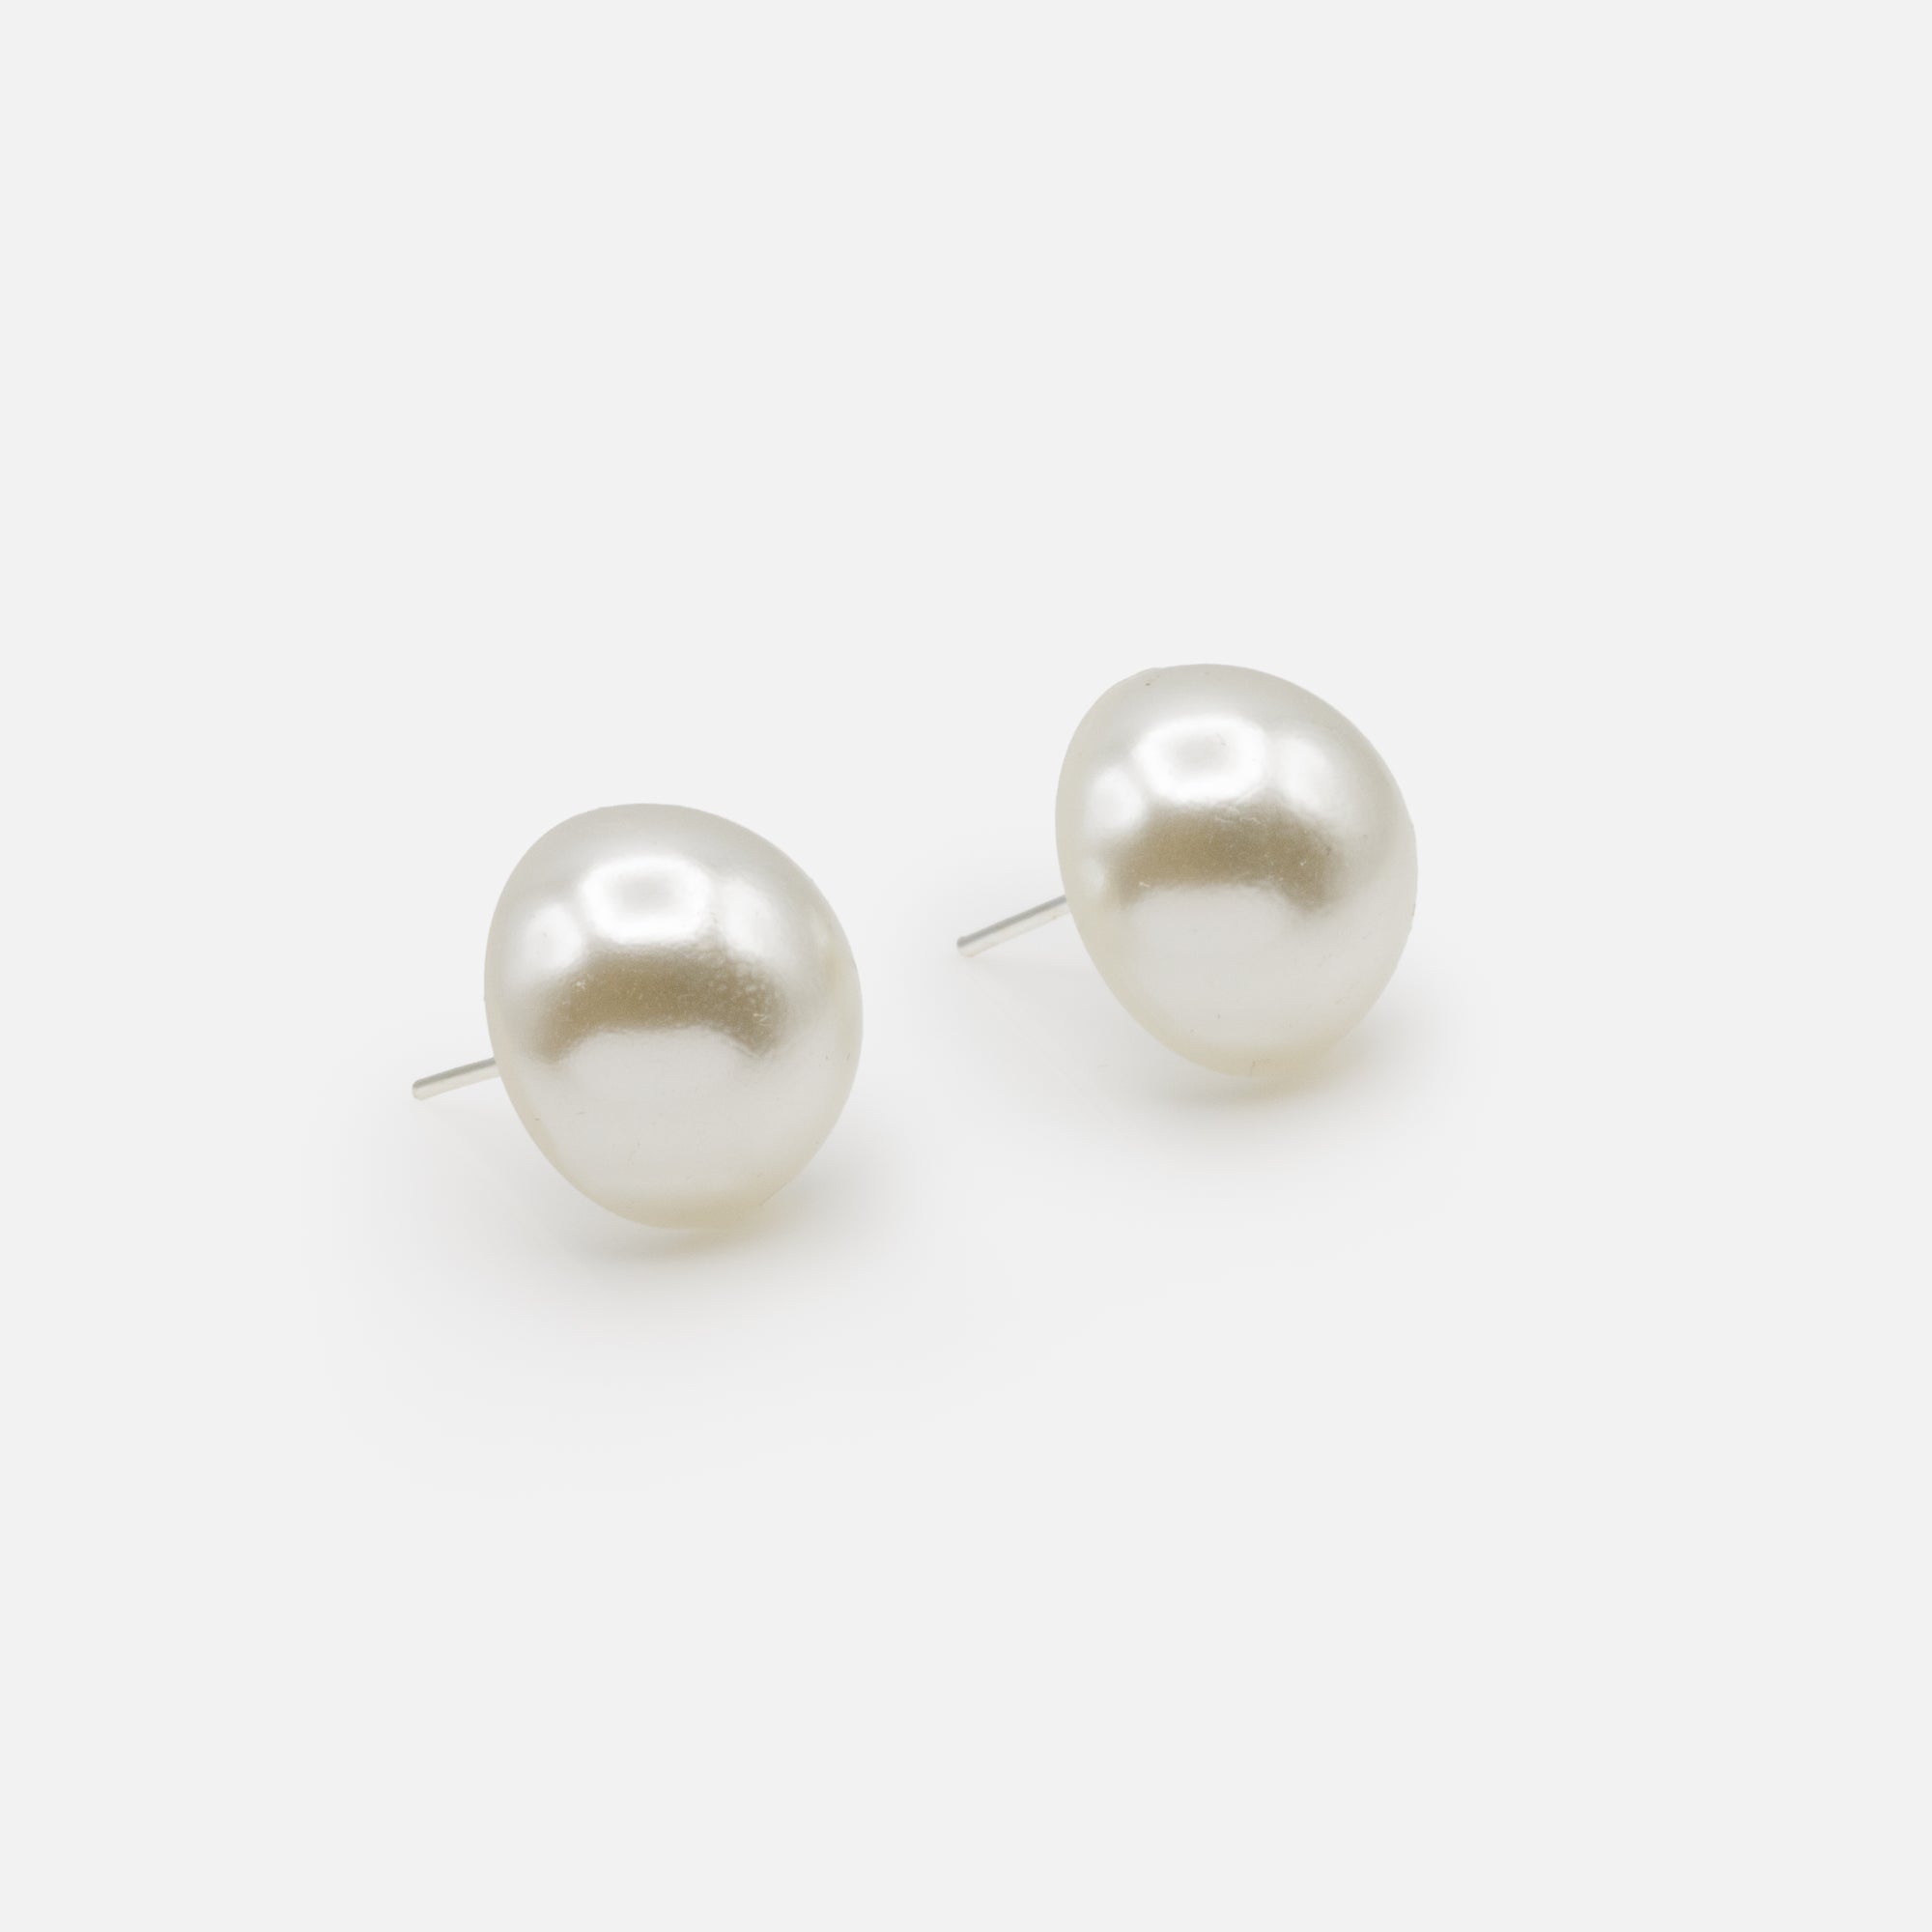 14 mm half ball glass pearl earrings